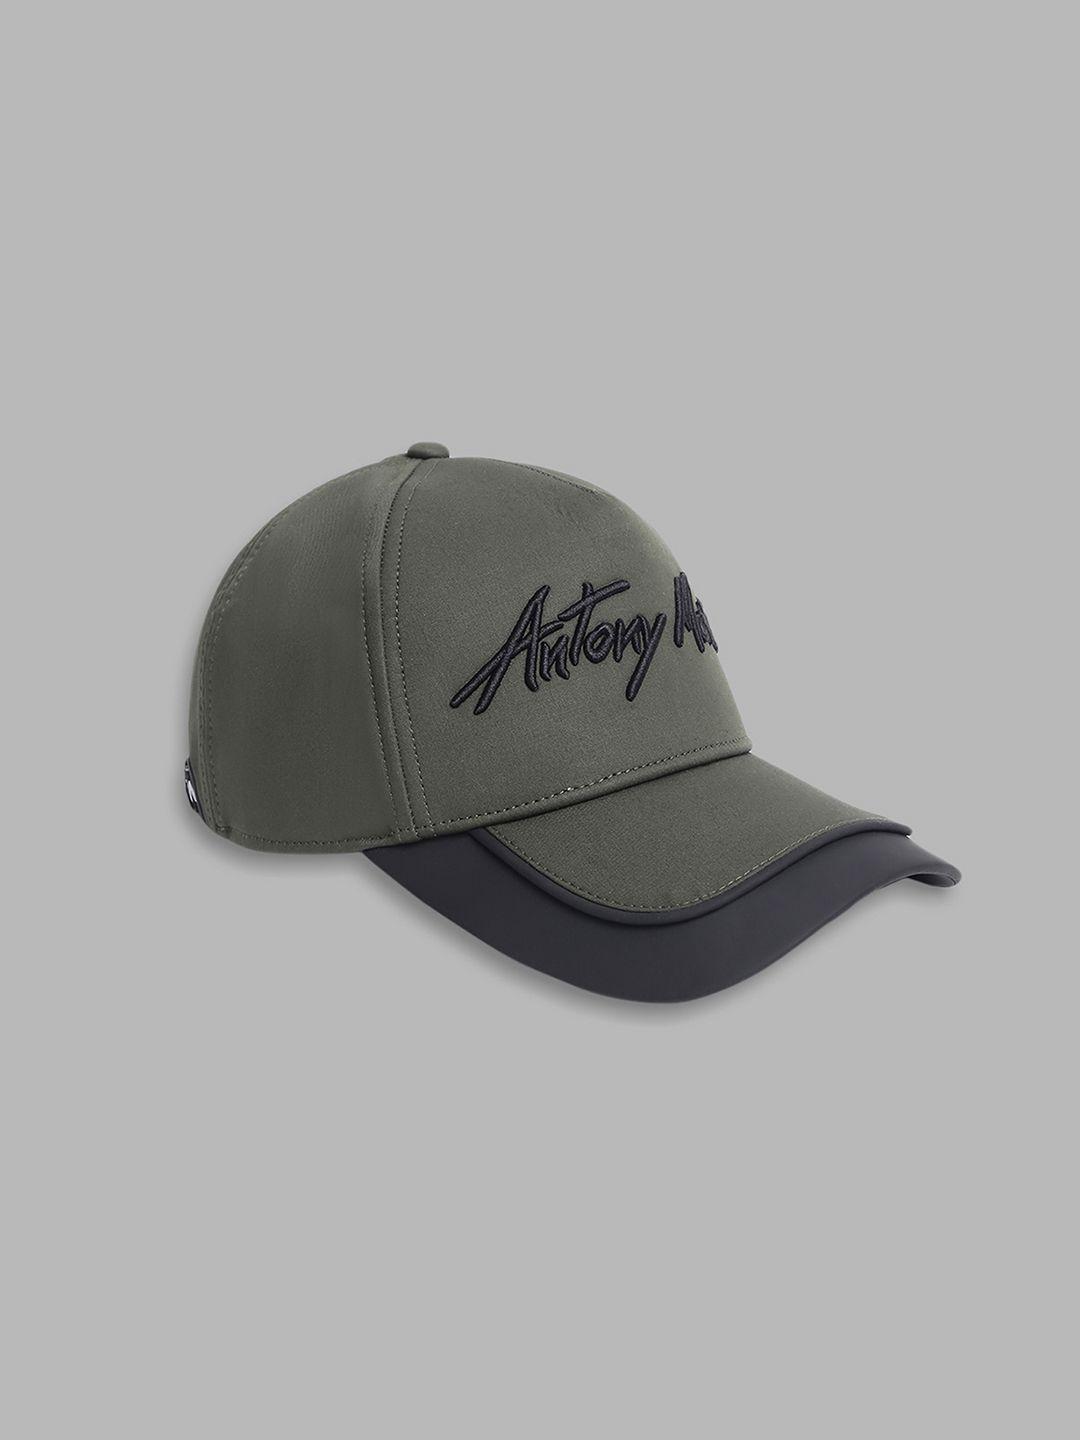 antony morato men olive green & black embroidered baseball cap